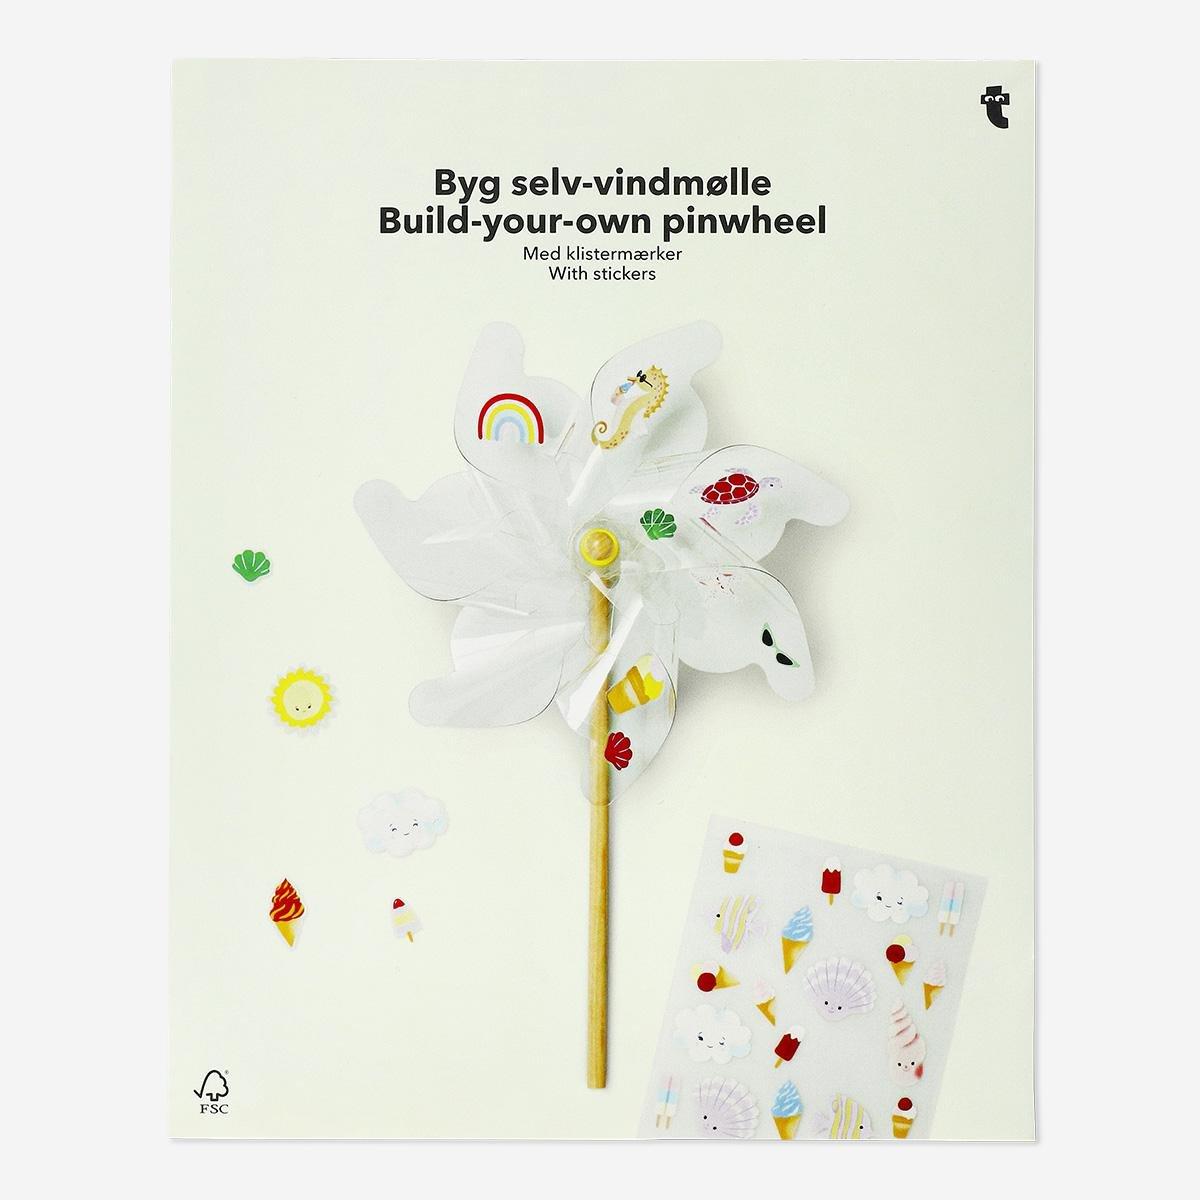 Build-your-own pinwheel